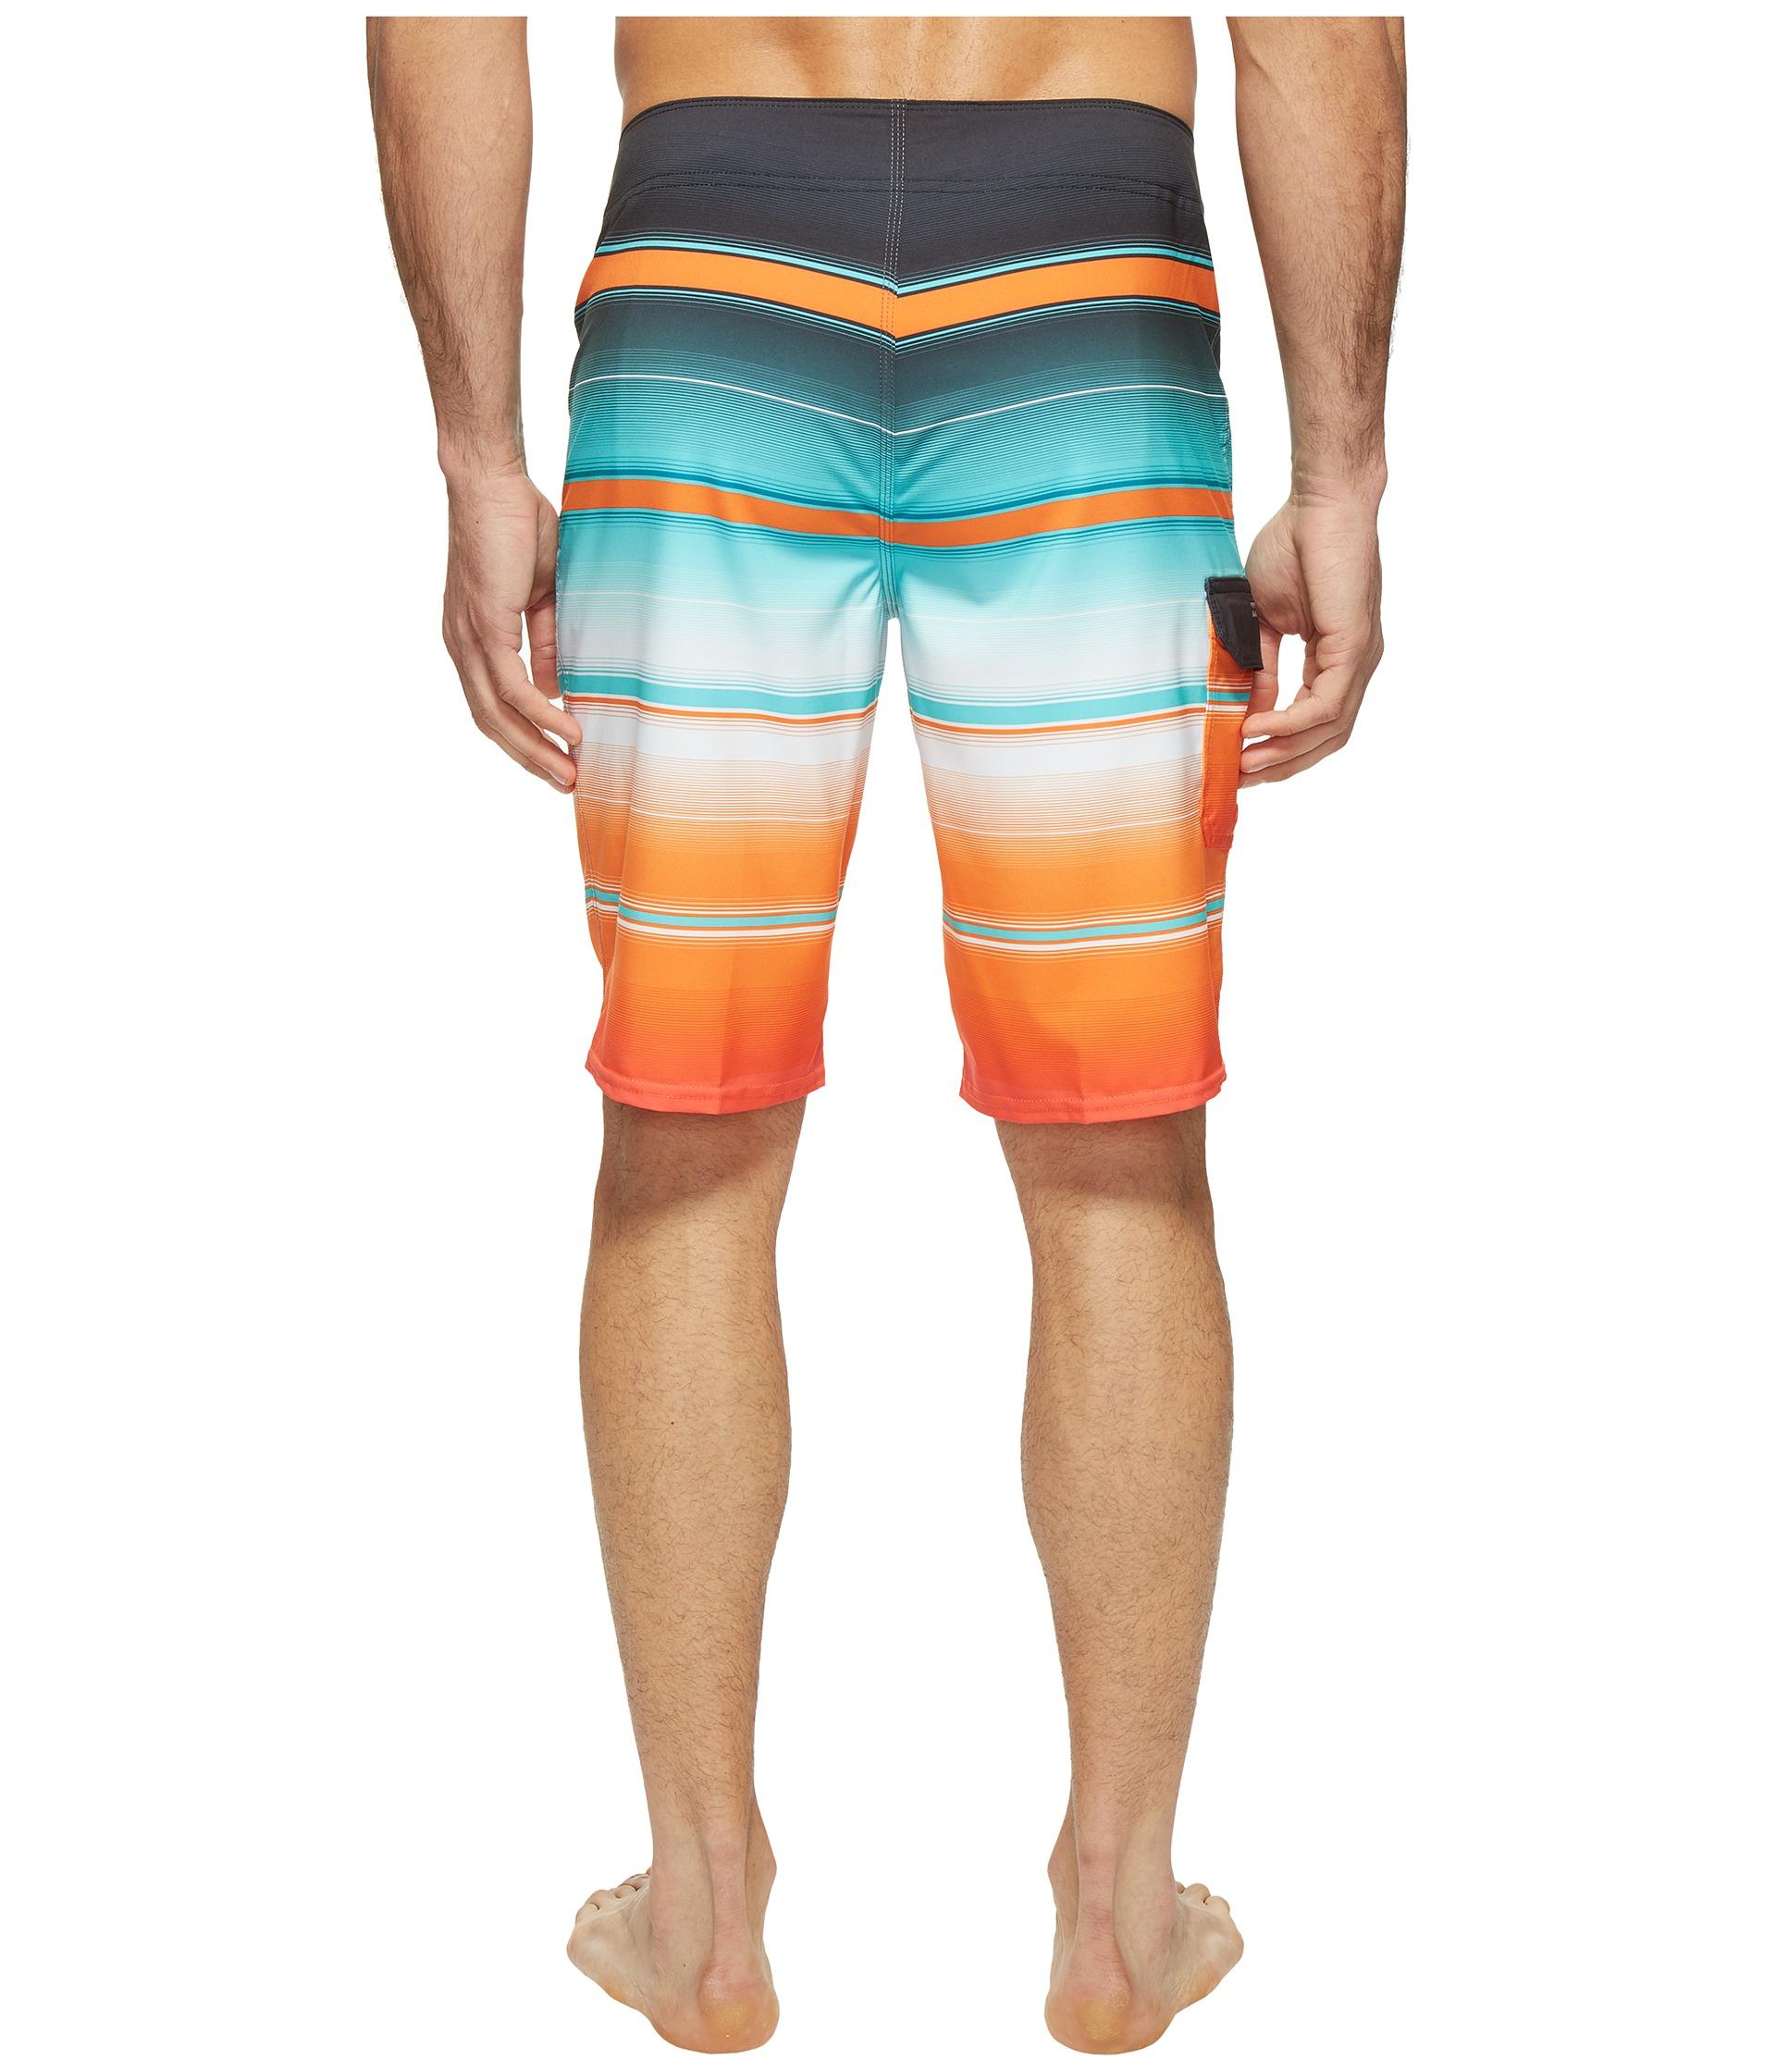 Billabong Synthetic All Day X Stripe Boardshorts in Orange for Men - Lyst